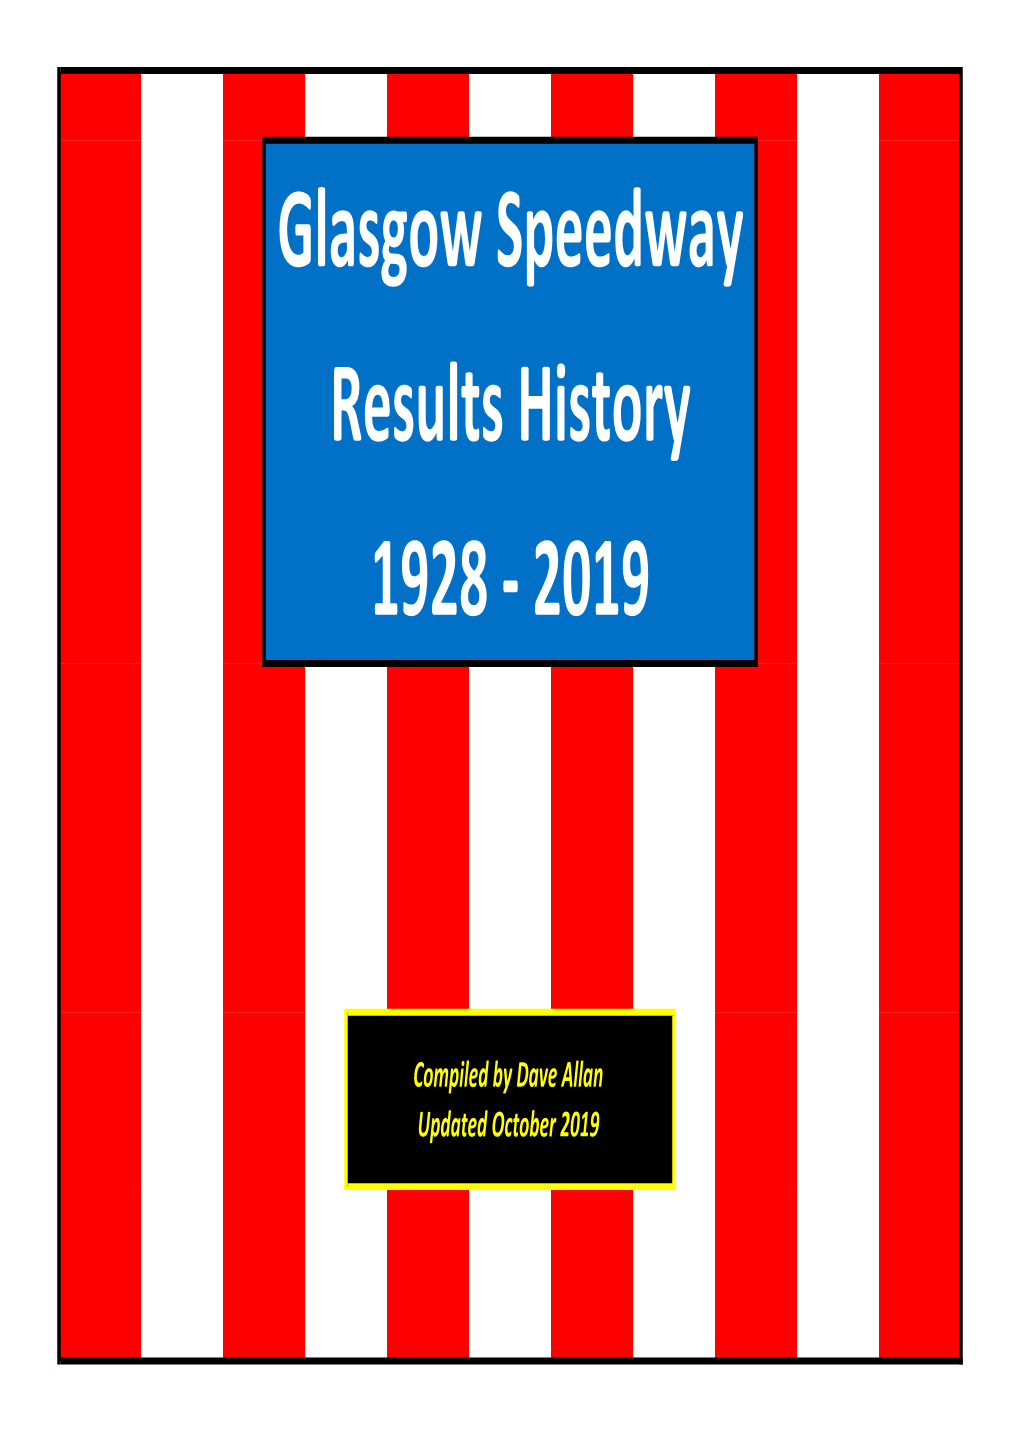 Glasgow Speedway Results 1928-2019.Xlsx